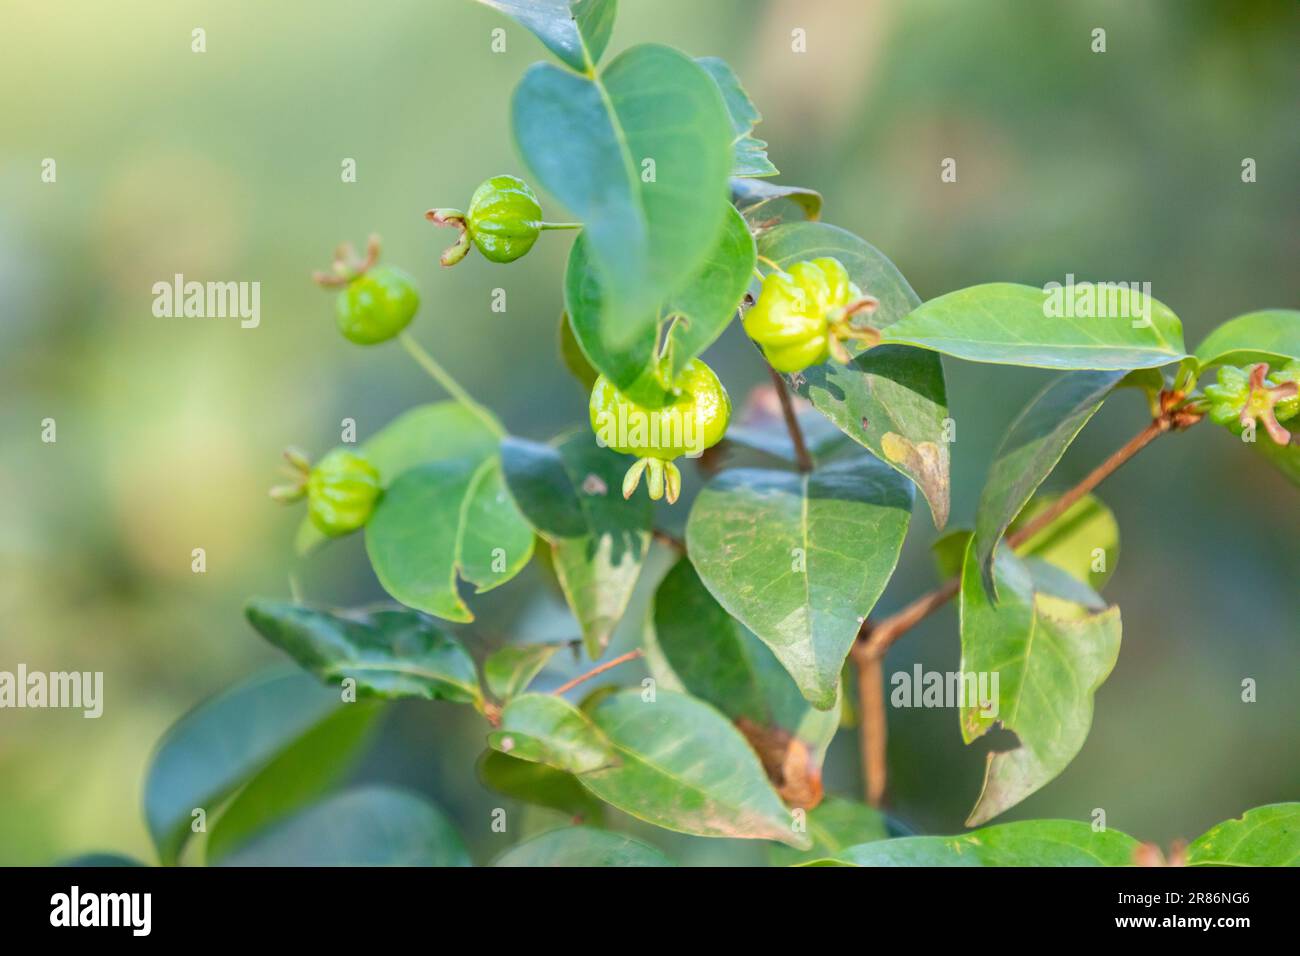 Ripe pitanga fruits (Eugenia uniflora),on the tree and blurred background Stock Photo